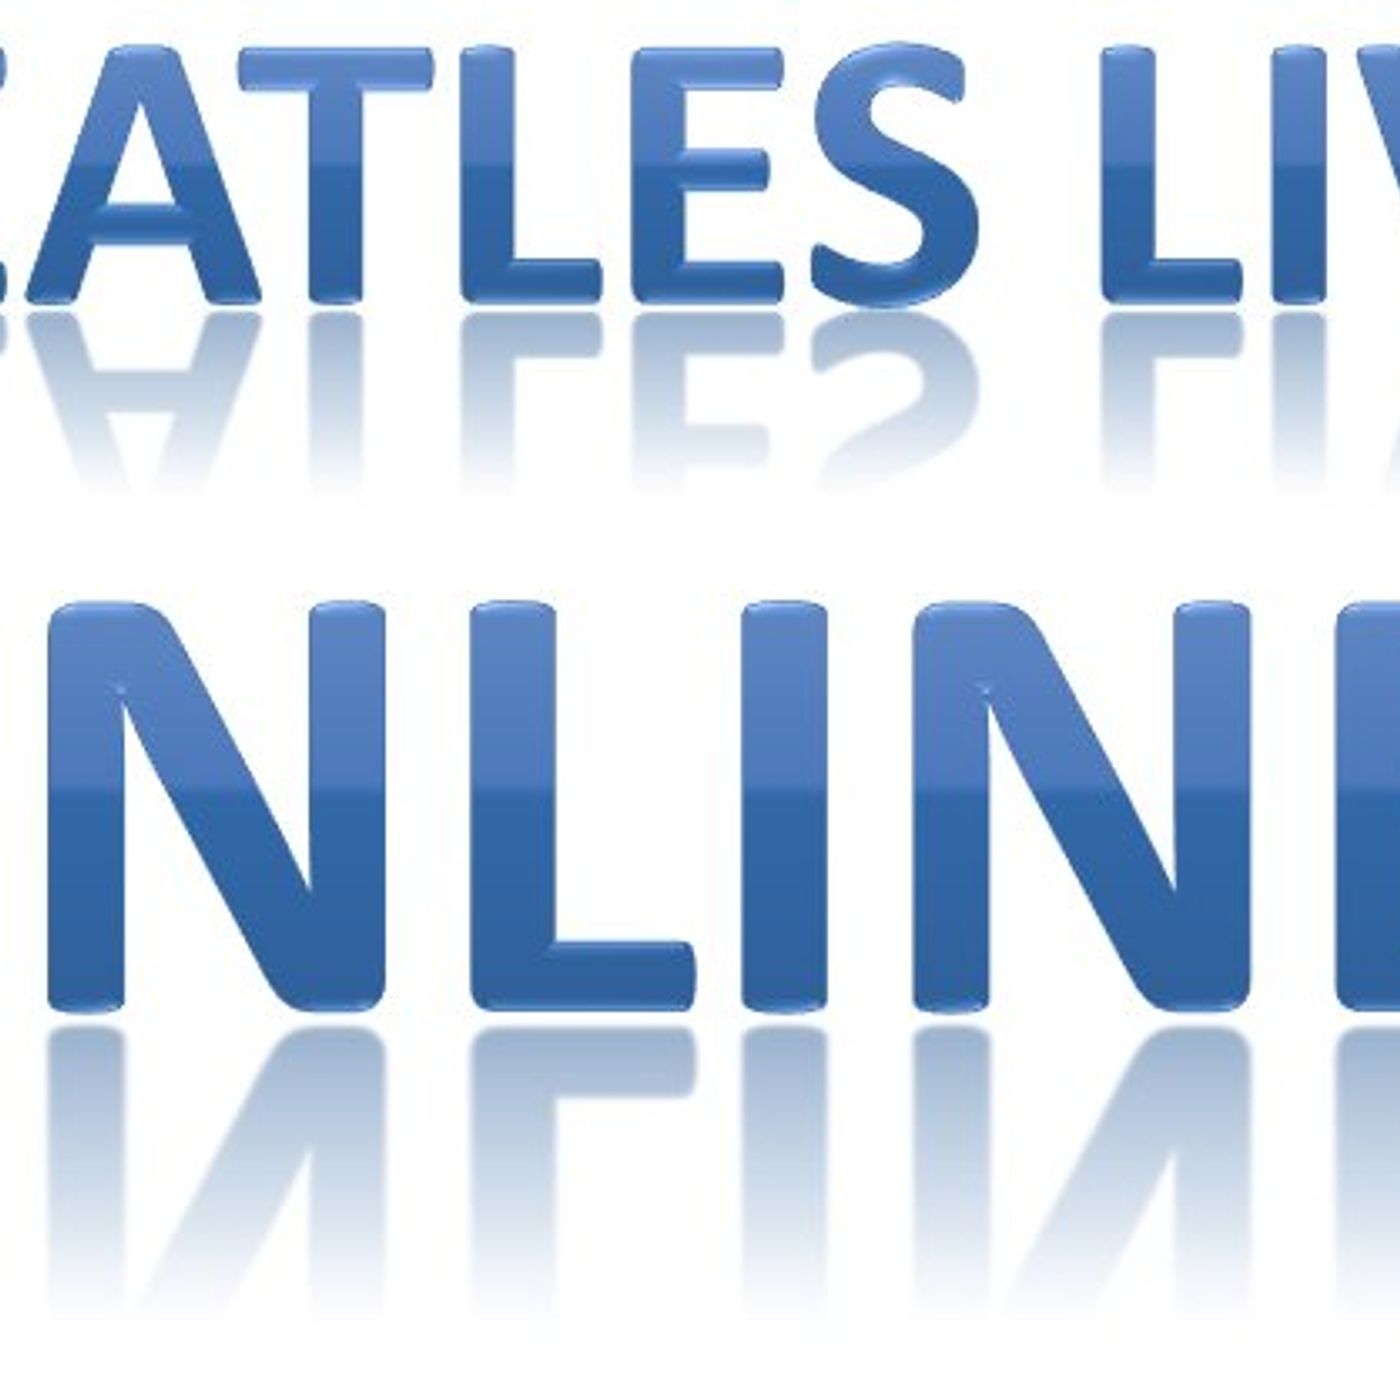 Beatles Live On Line Broadcast